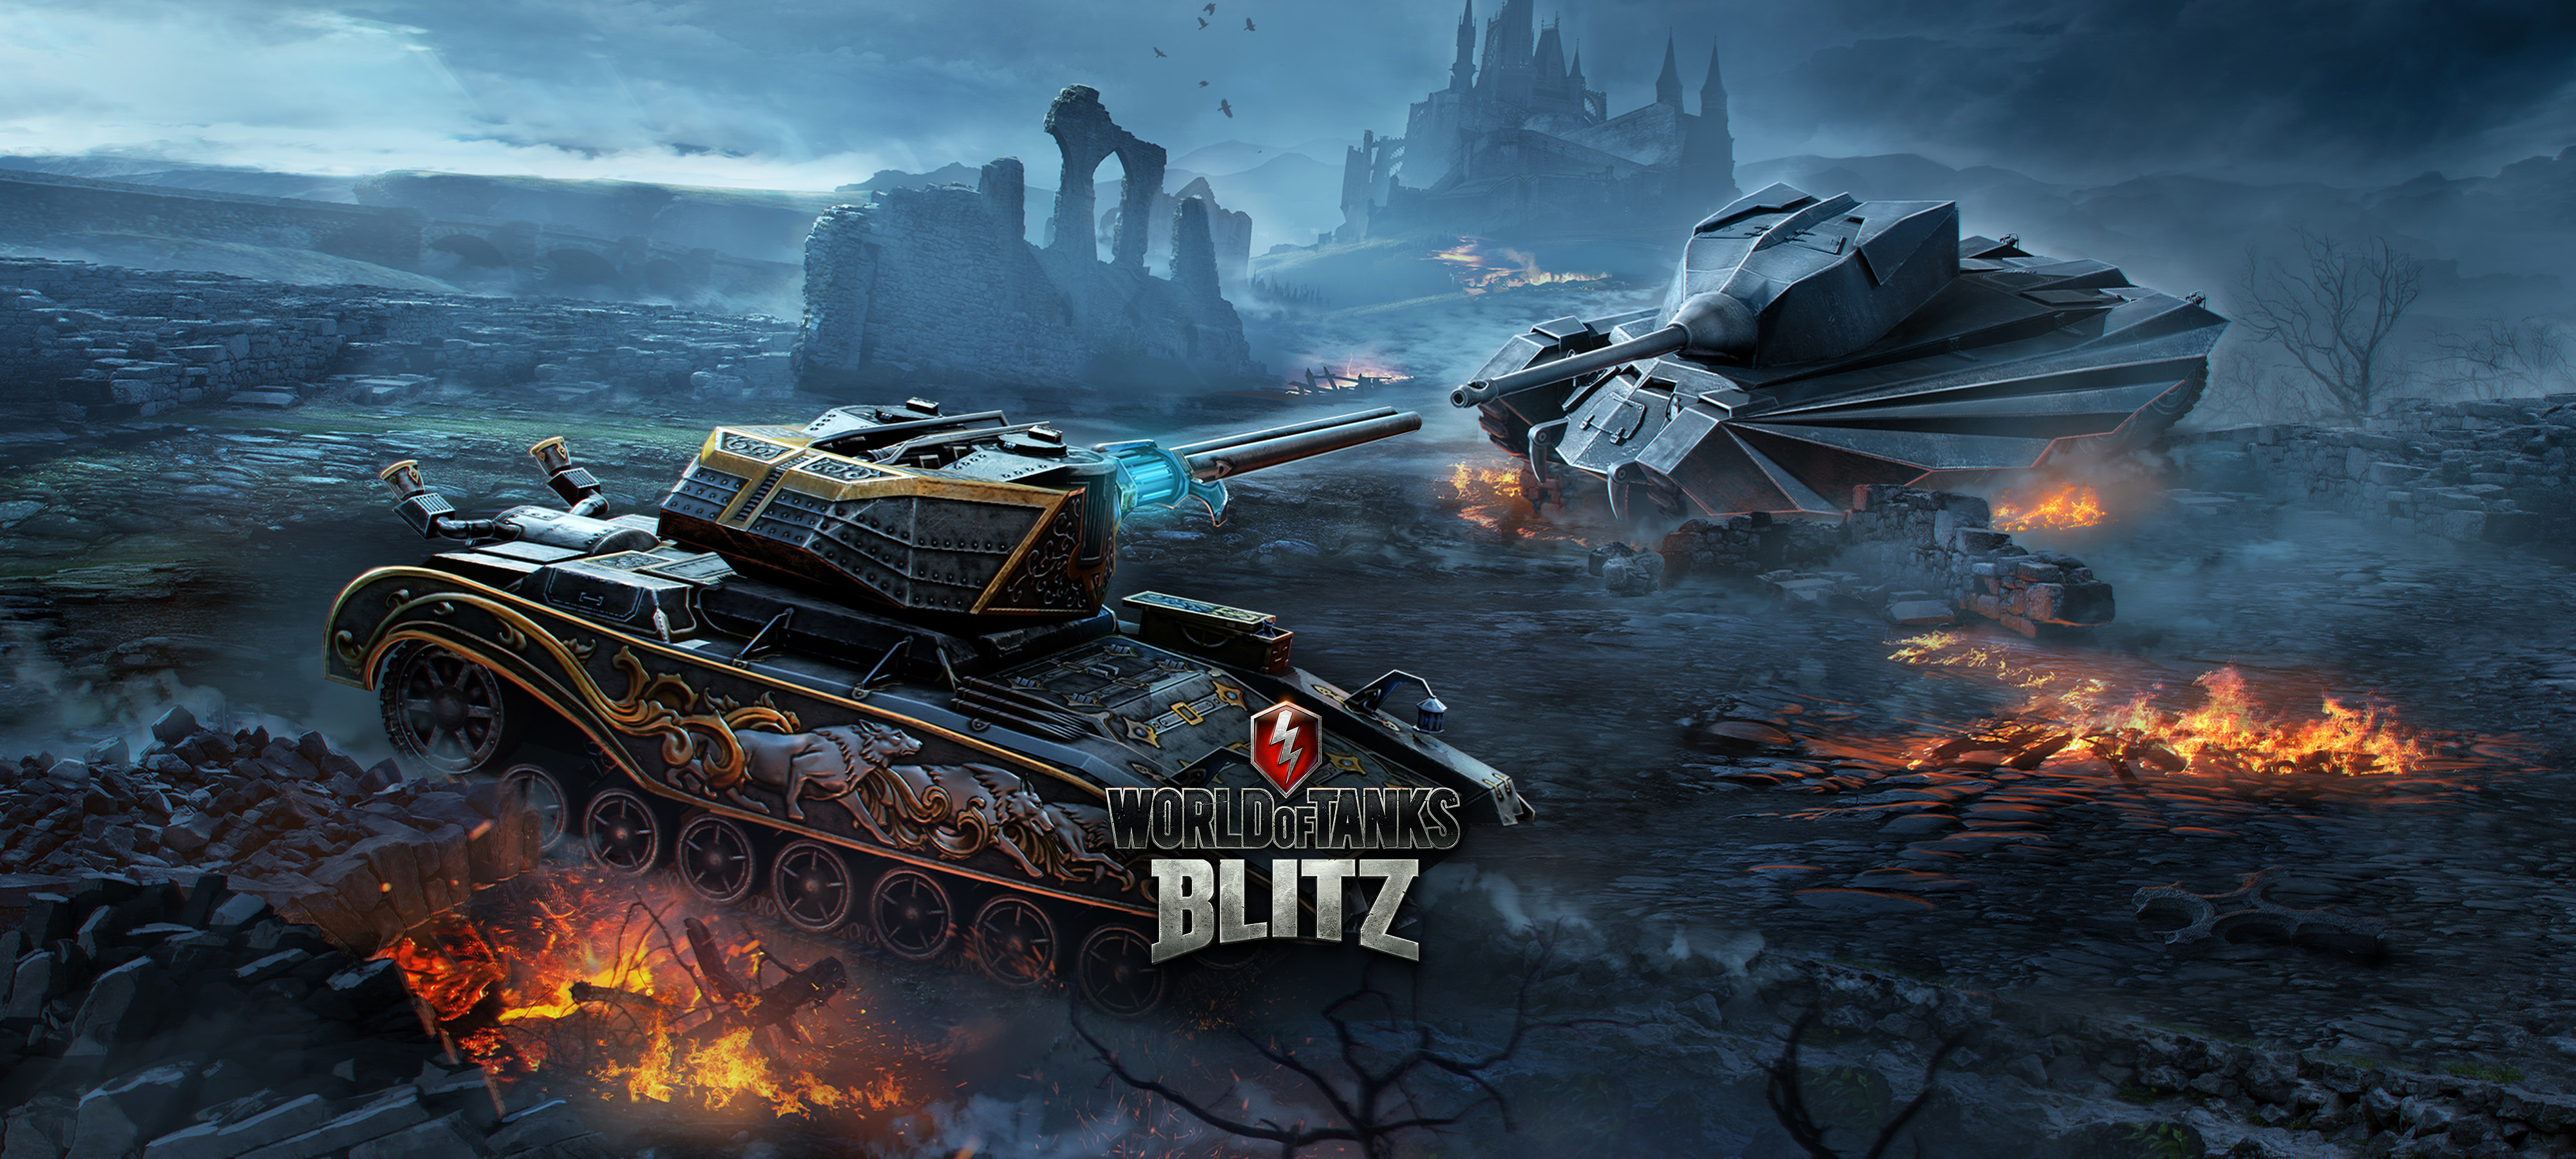 world of tanks blitz pc update november 2018